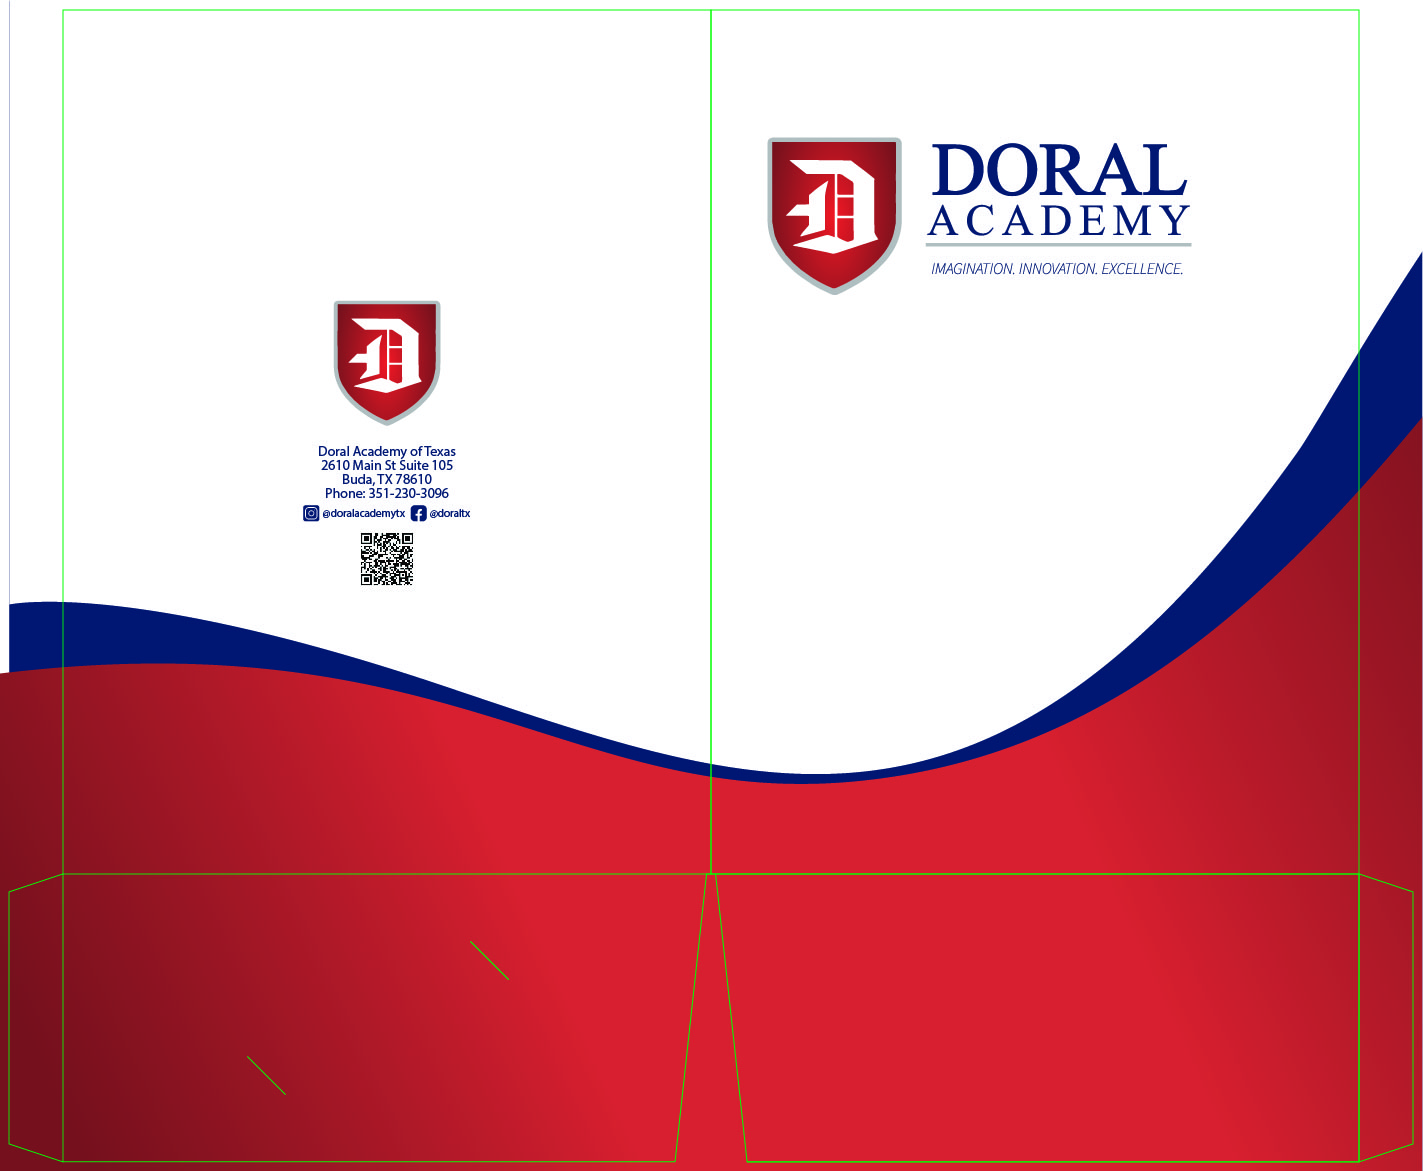 Second proposed design option for Doral Academy's presentation folders